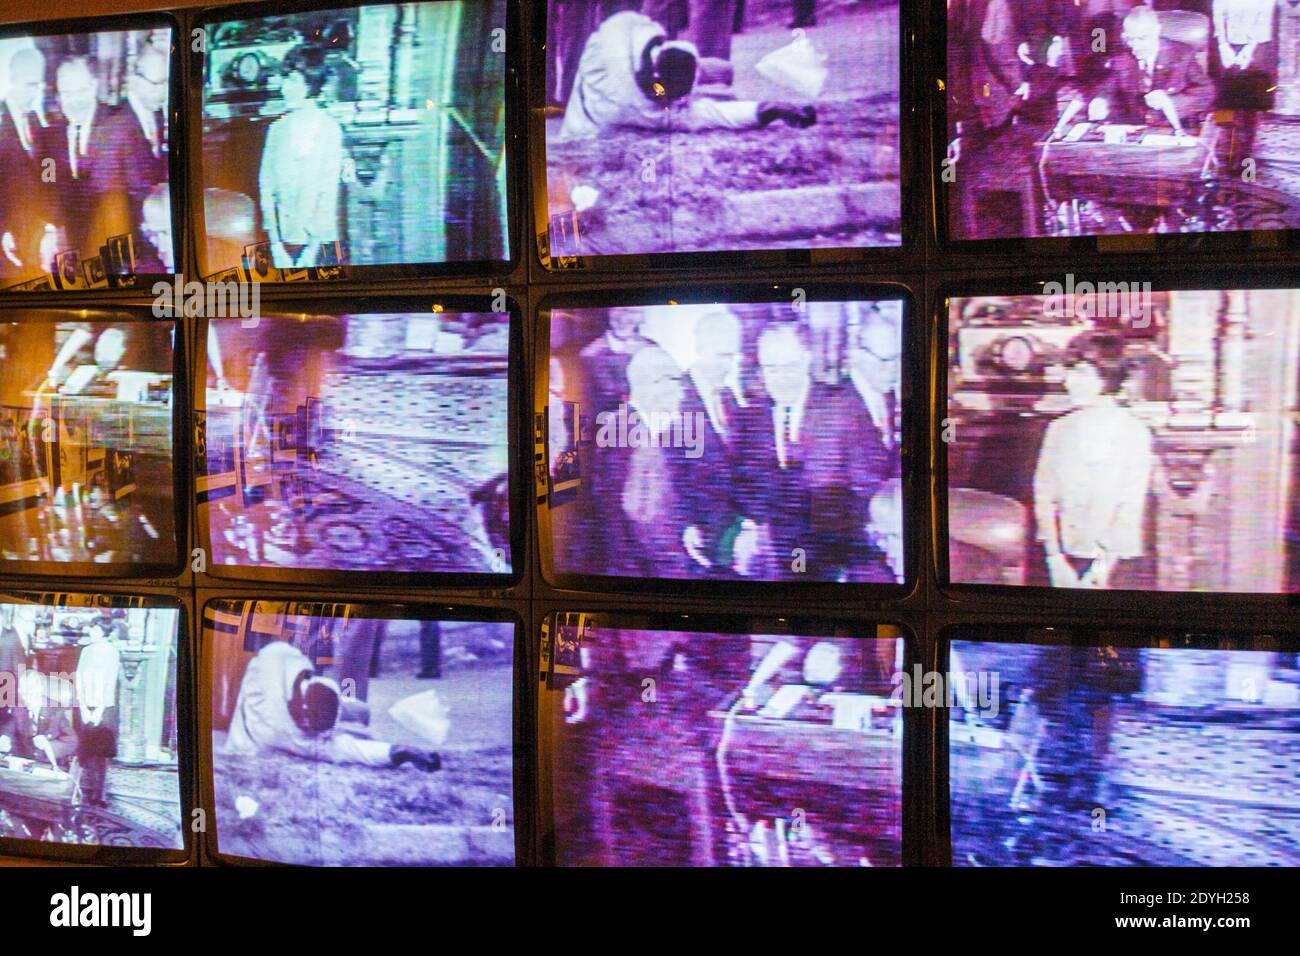 Birmingham Alabama,Civil Rights Institute Black video screens monitors,exhibit exhibition collection looking segregation racism history inside interio Stock Photo